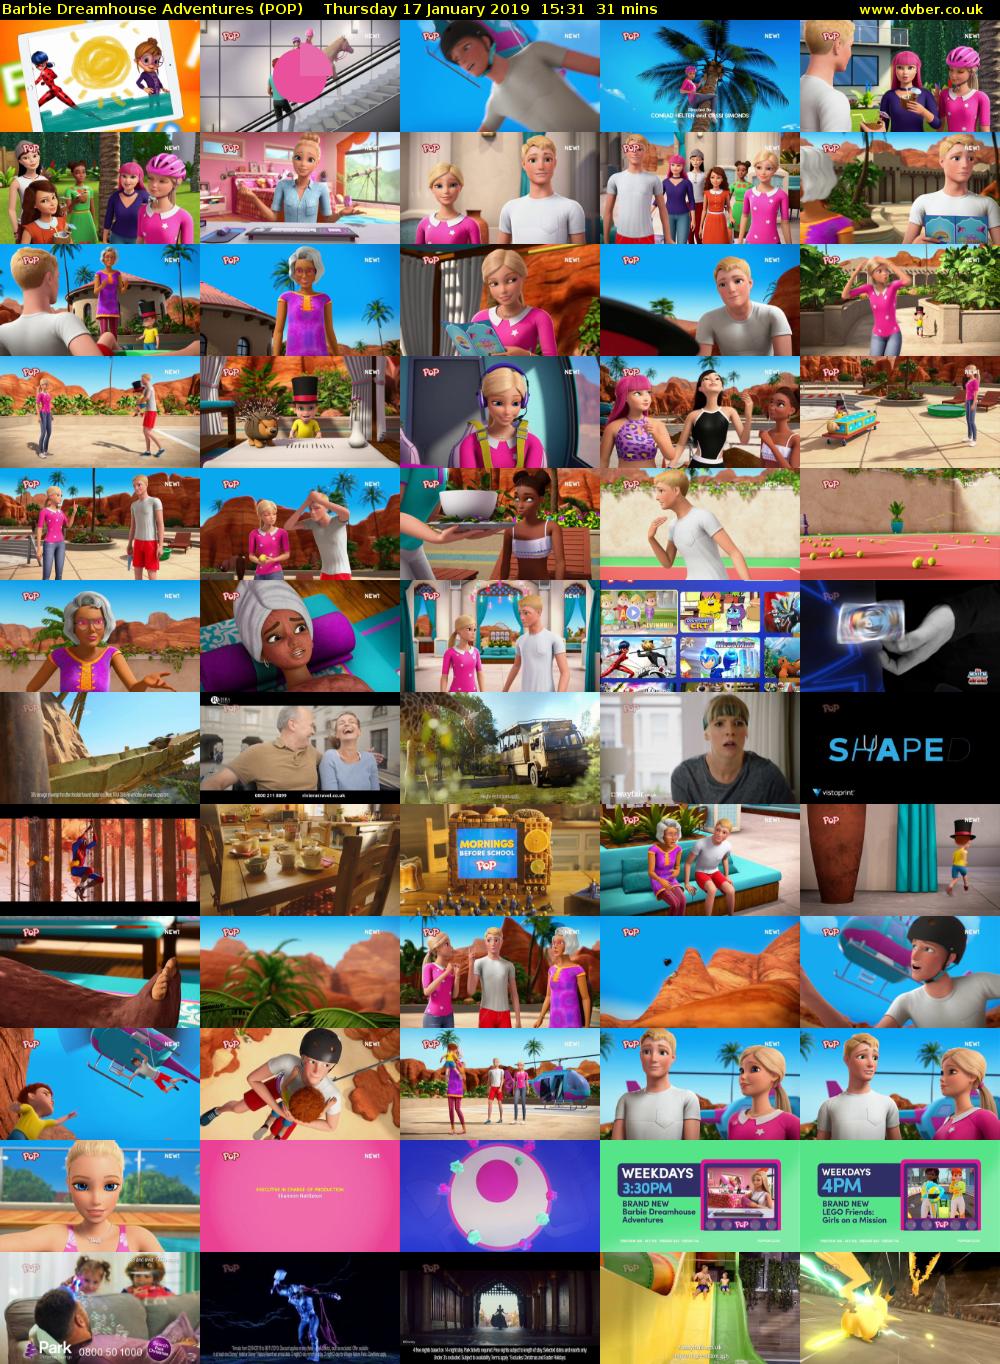 Barbie Dreamhouse Adventures (POP) Thursday 17 January 2019 15:31 - 16:02